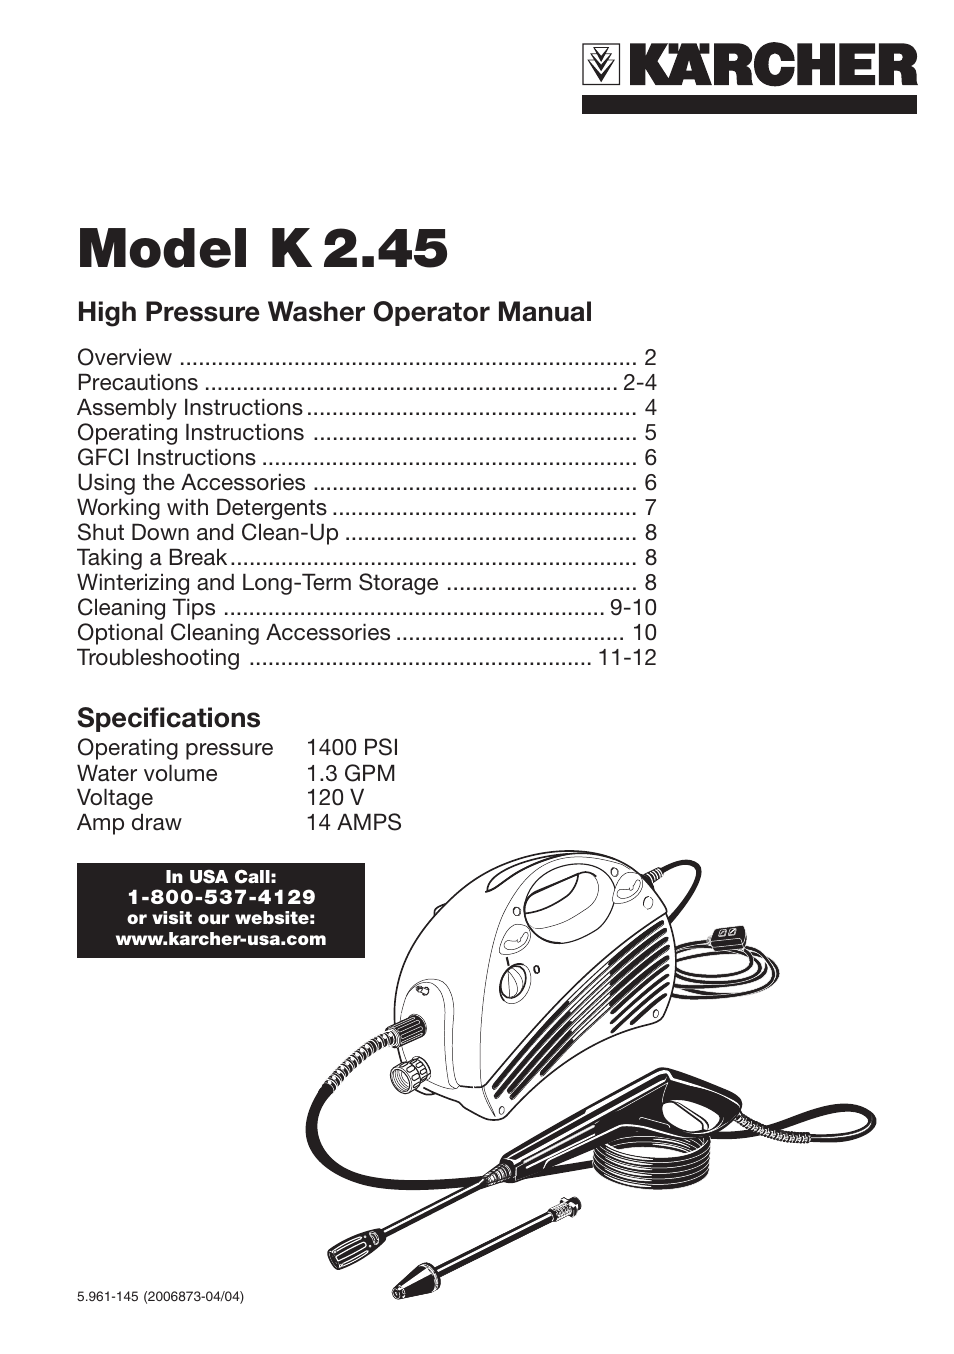 Karcher 2.45 Manual | pages